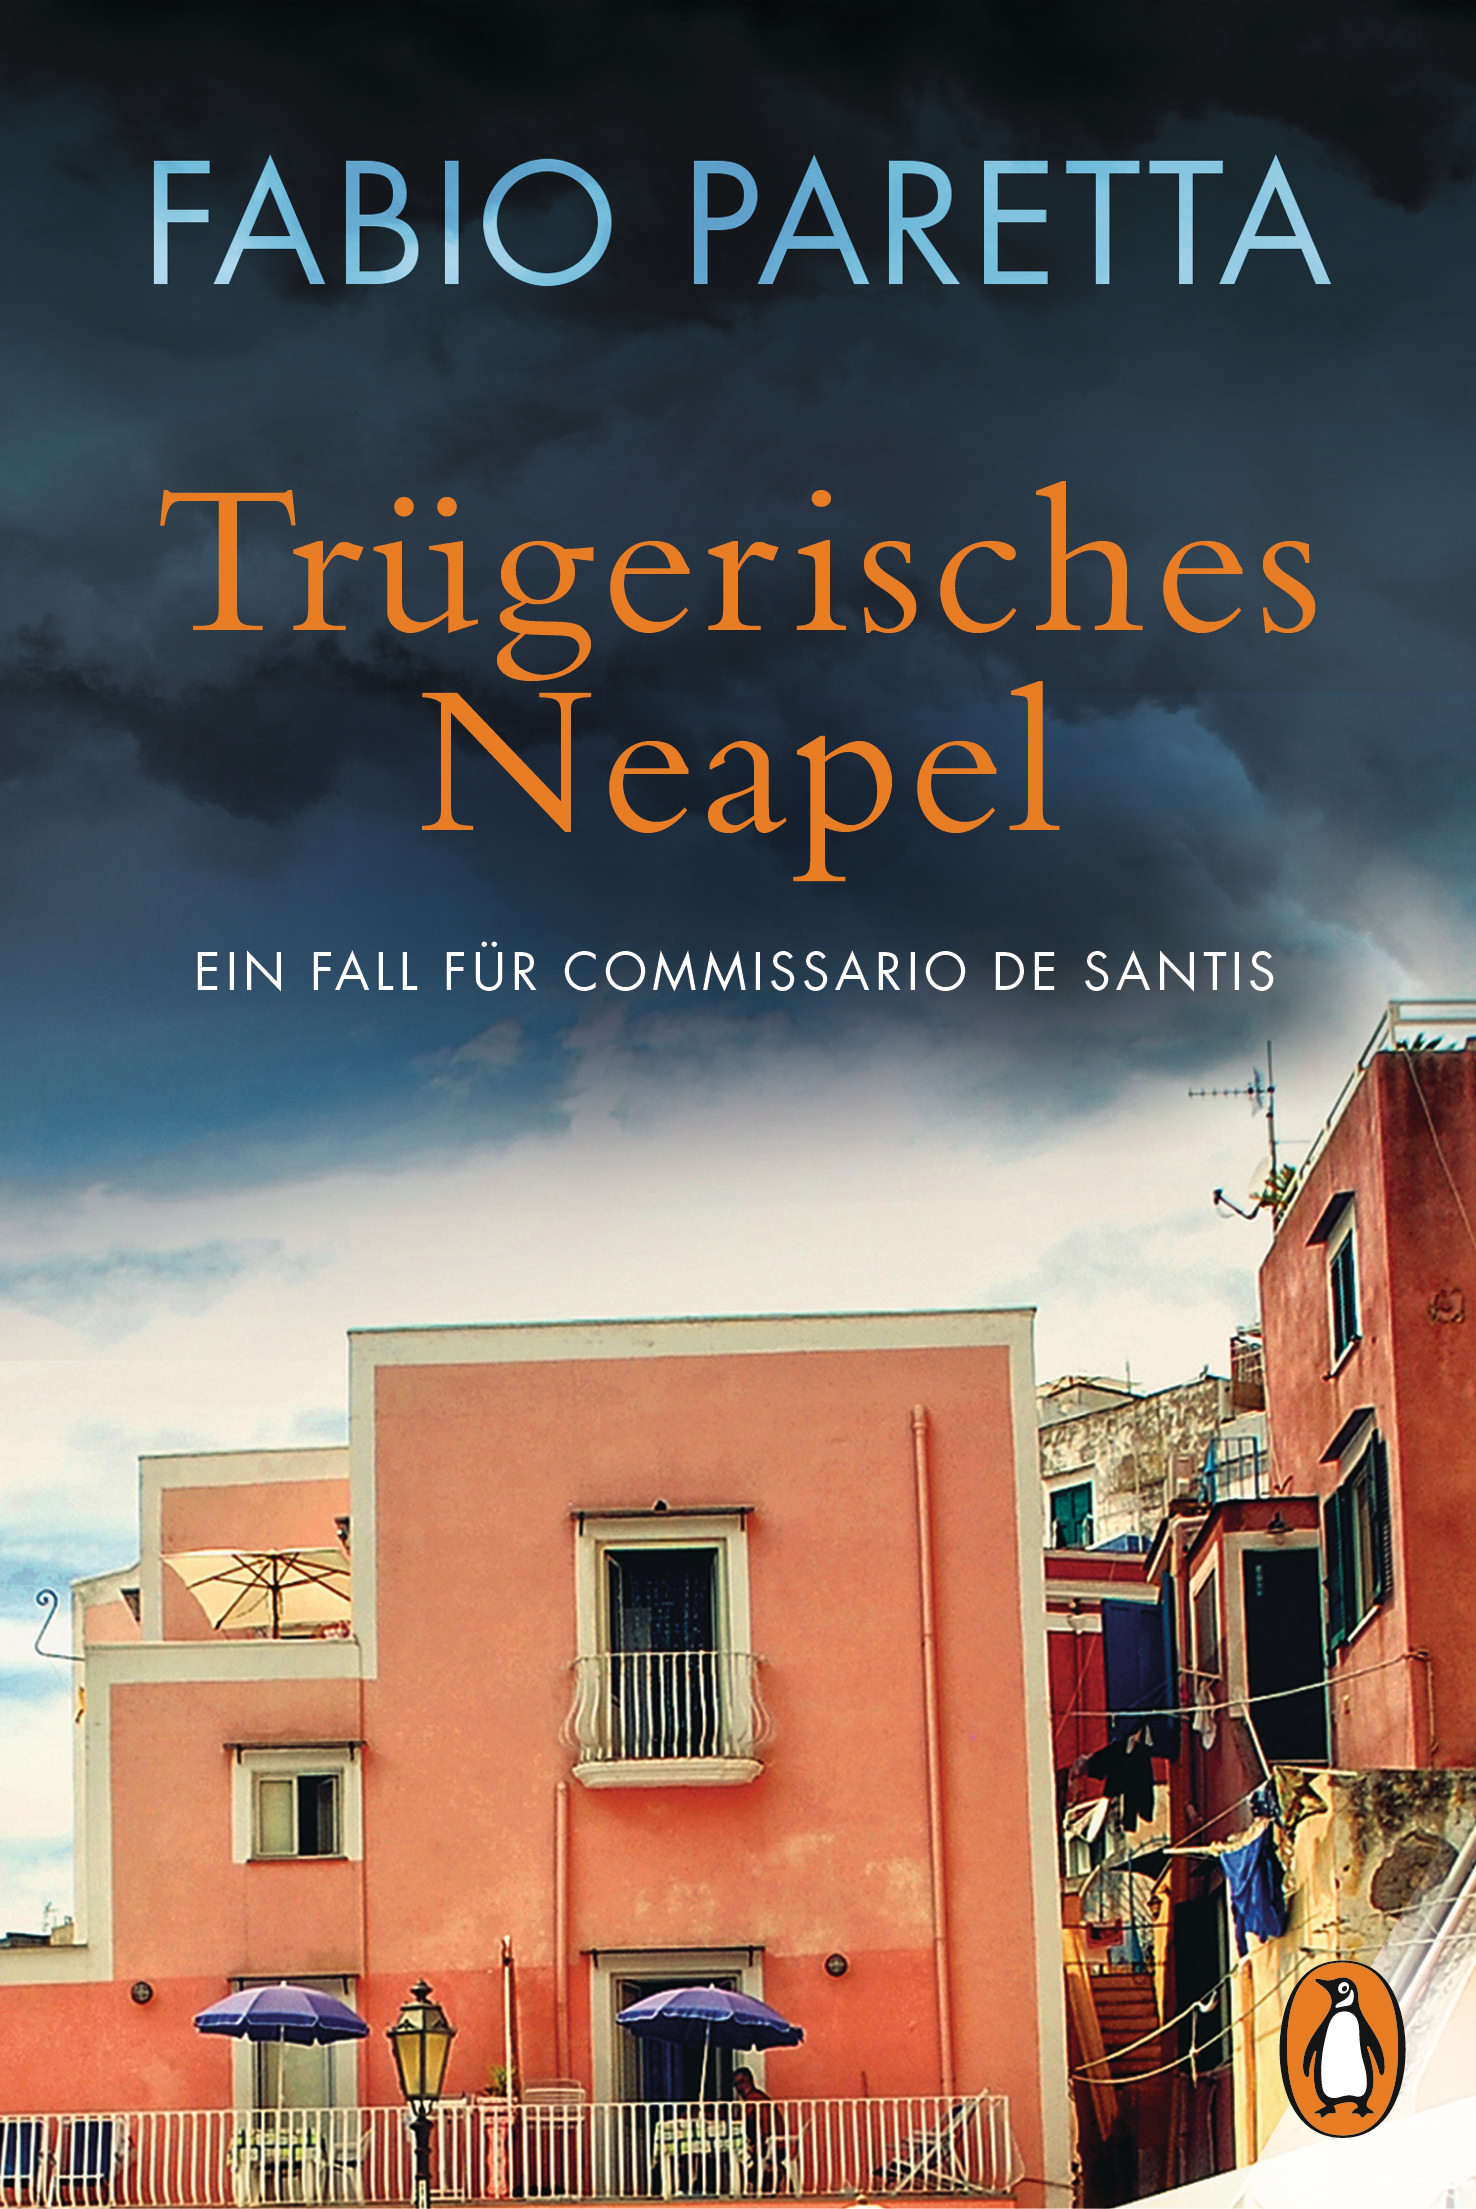 Buchcover: Fabio Paretta: Trügerisches Neapel